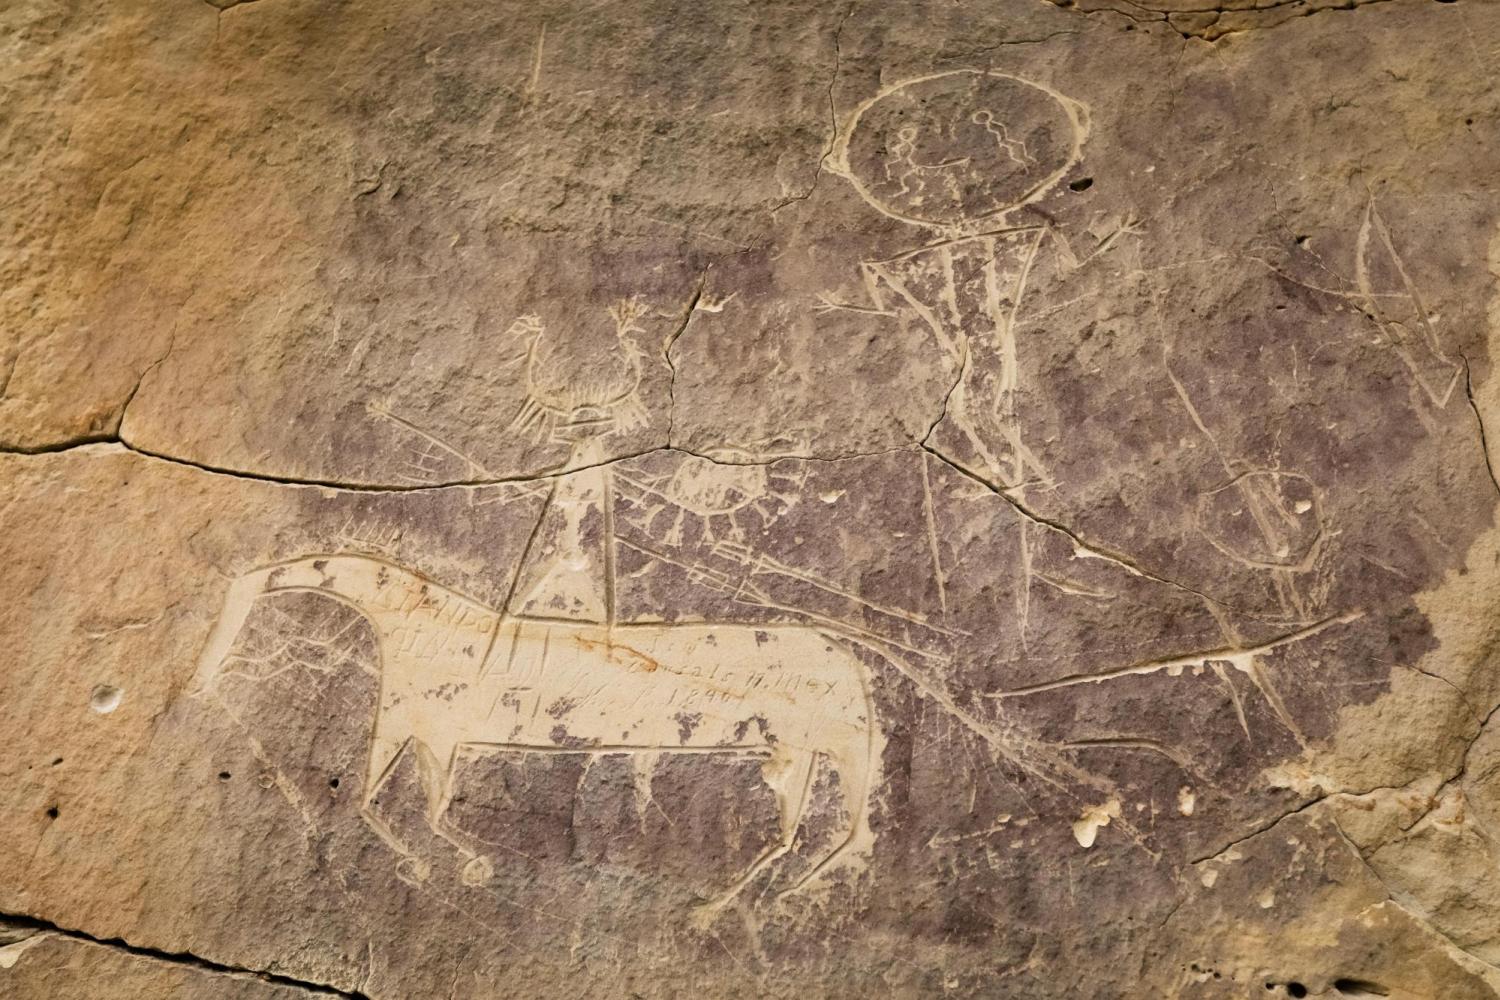 Petroglyphs depicting a rider on a horse